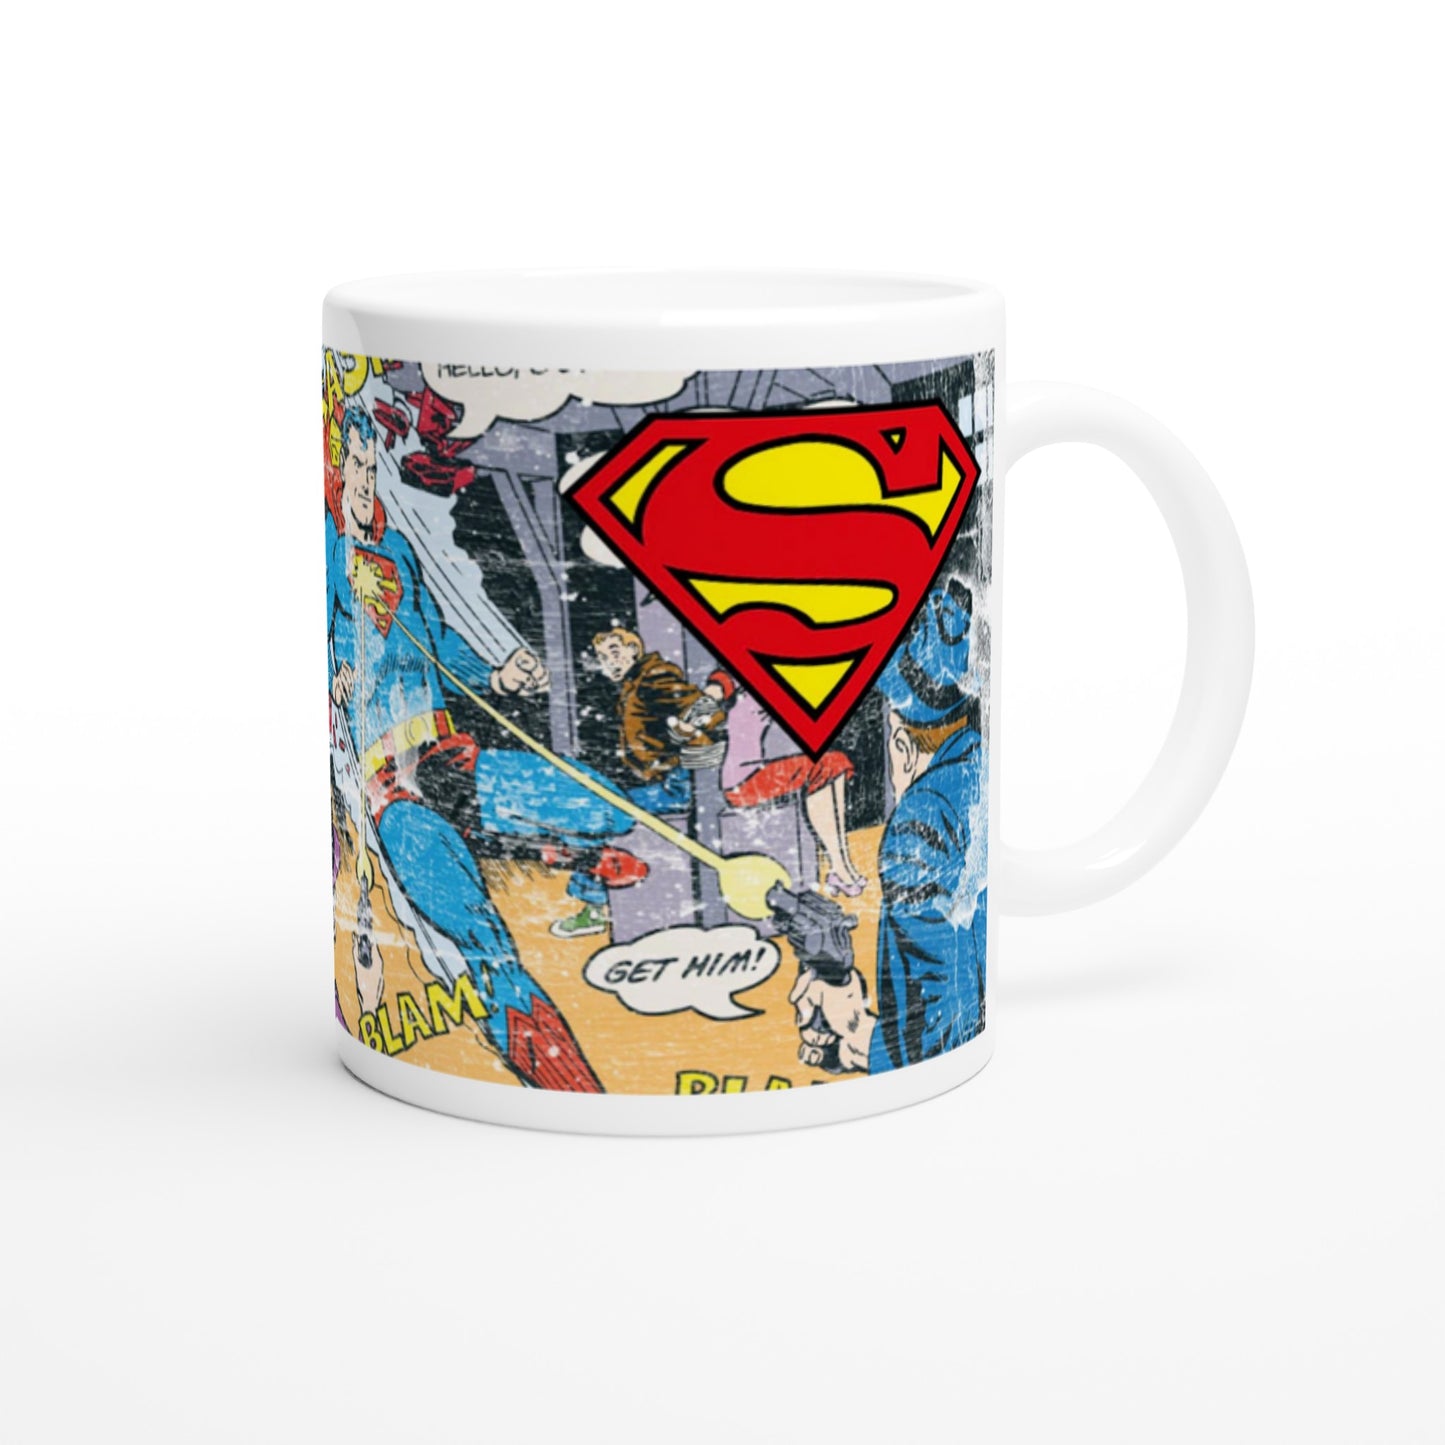 Offizielle DC Comics Tasse – Superman Distressed Strip – 330 ml weiße Tasse